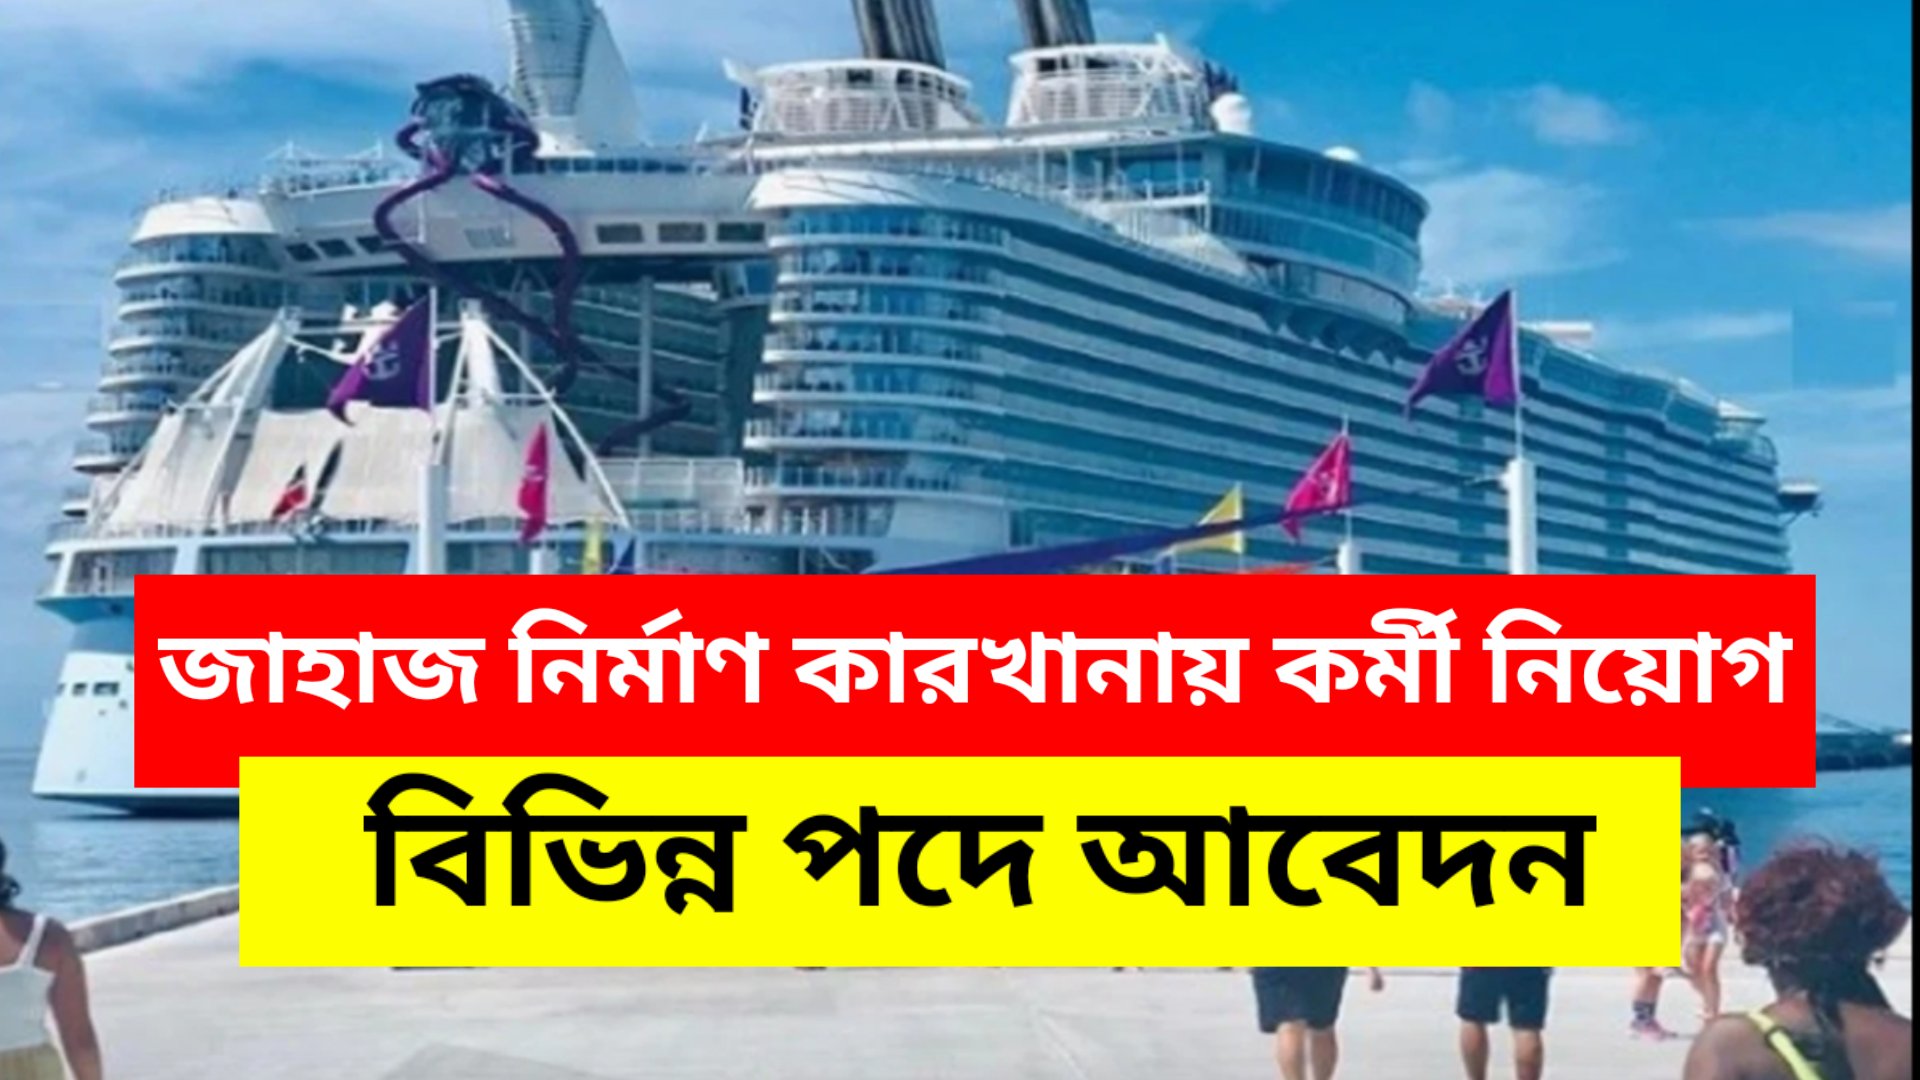 Hindustan Shipyard Limited.Visakhapatnam Notification for engagement of Apprentices under